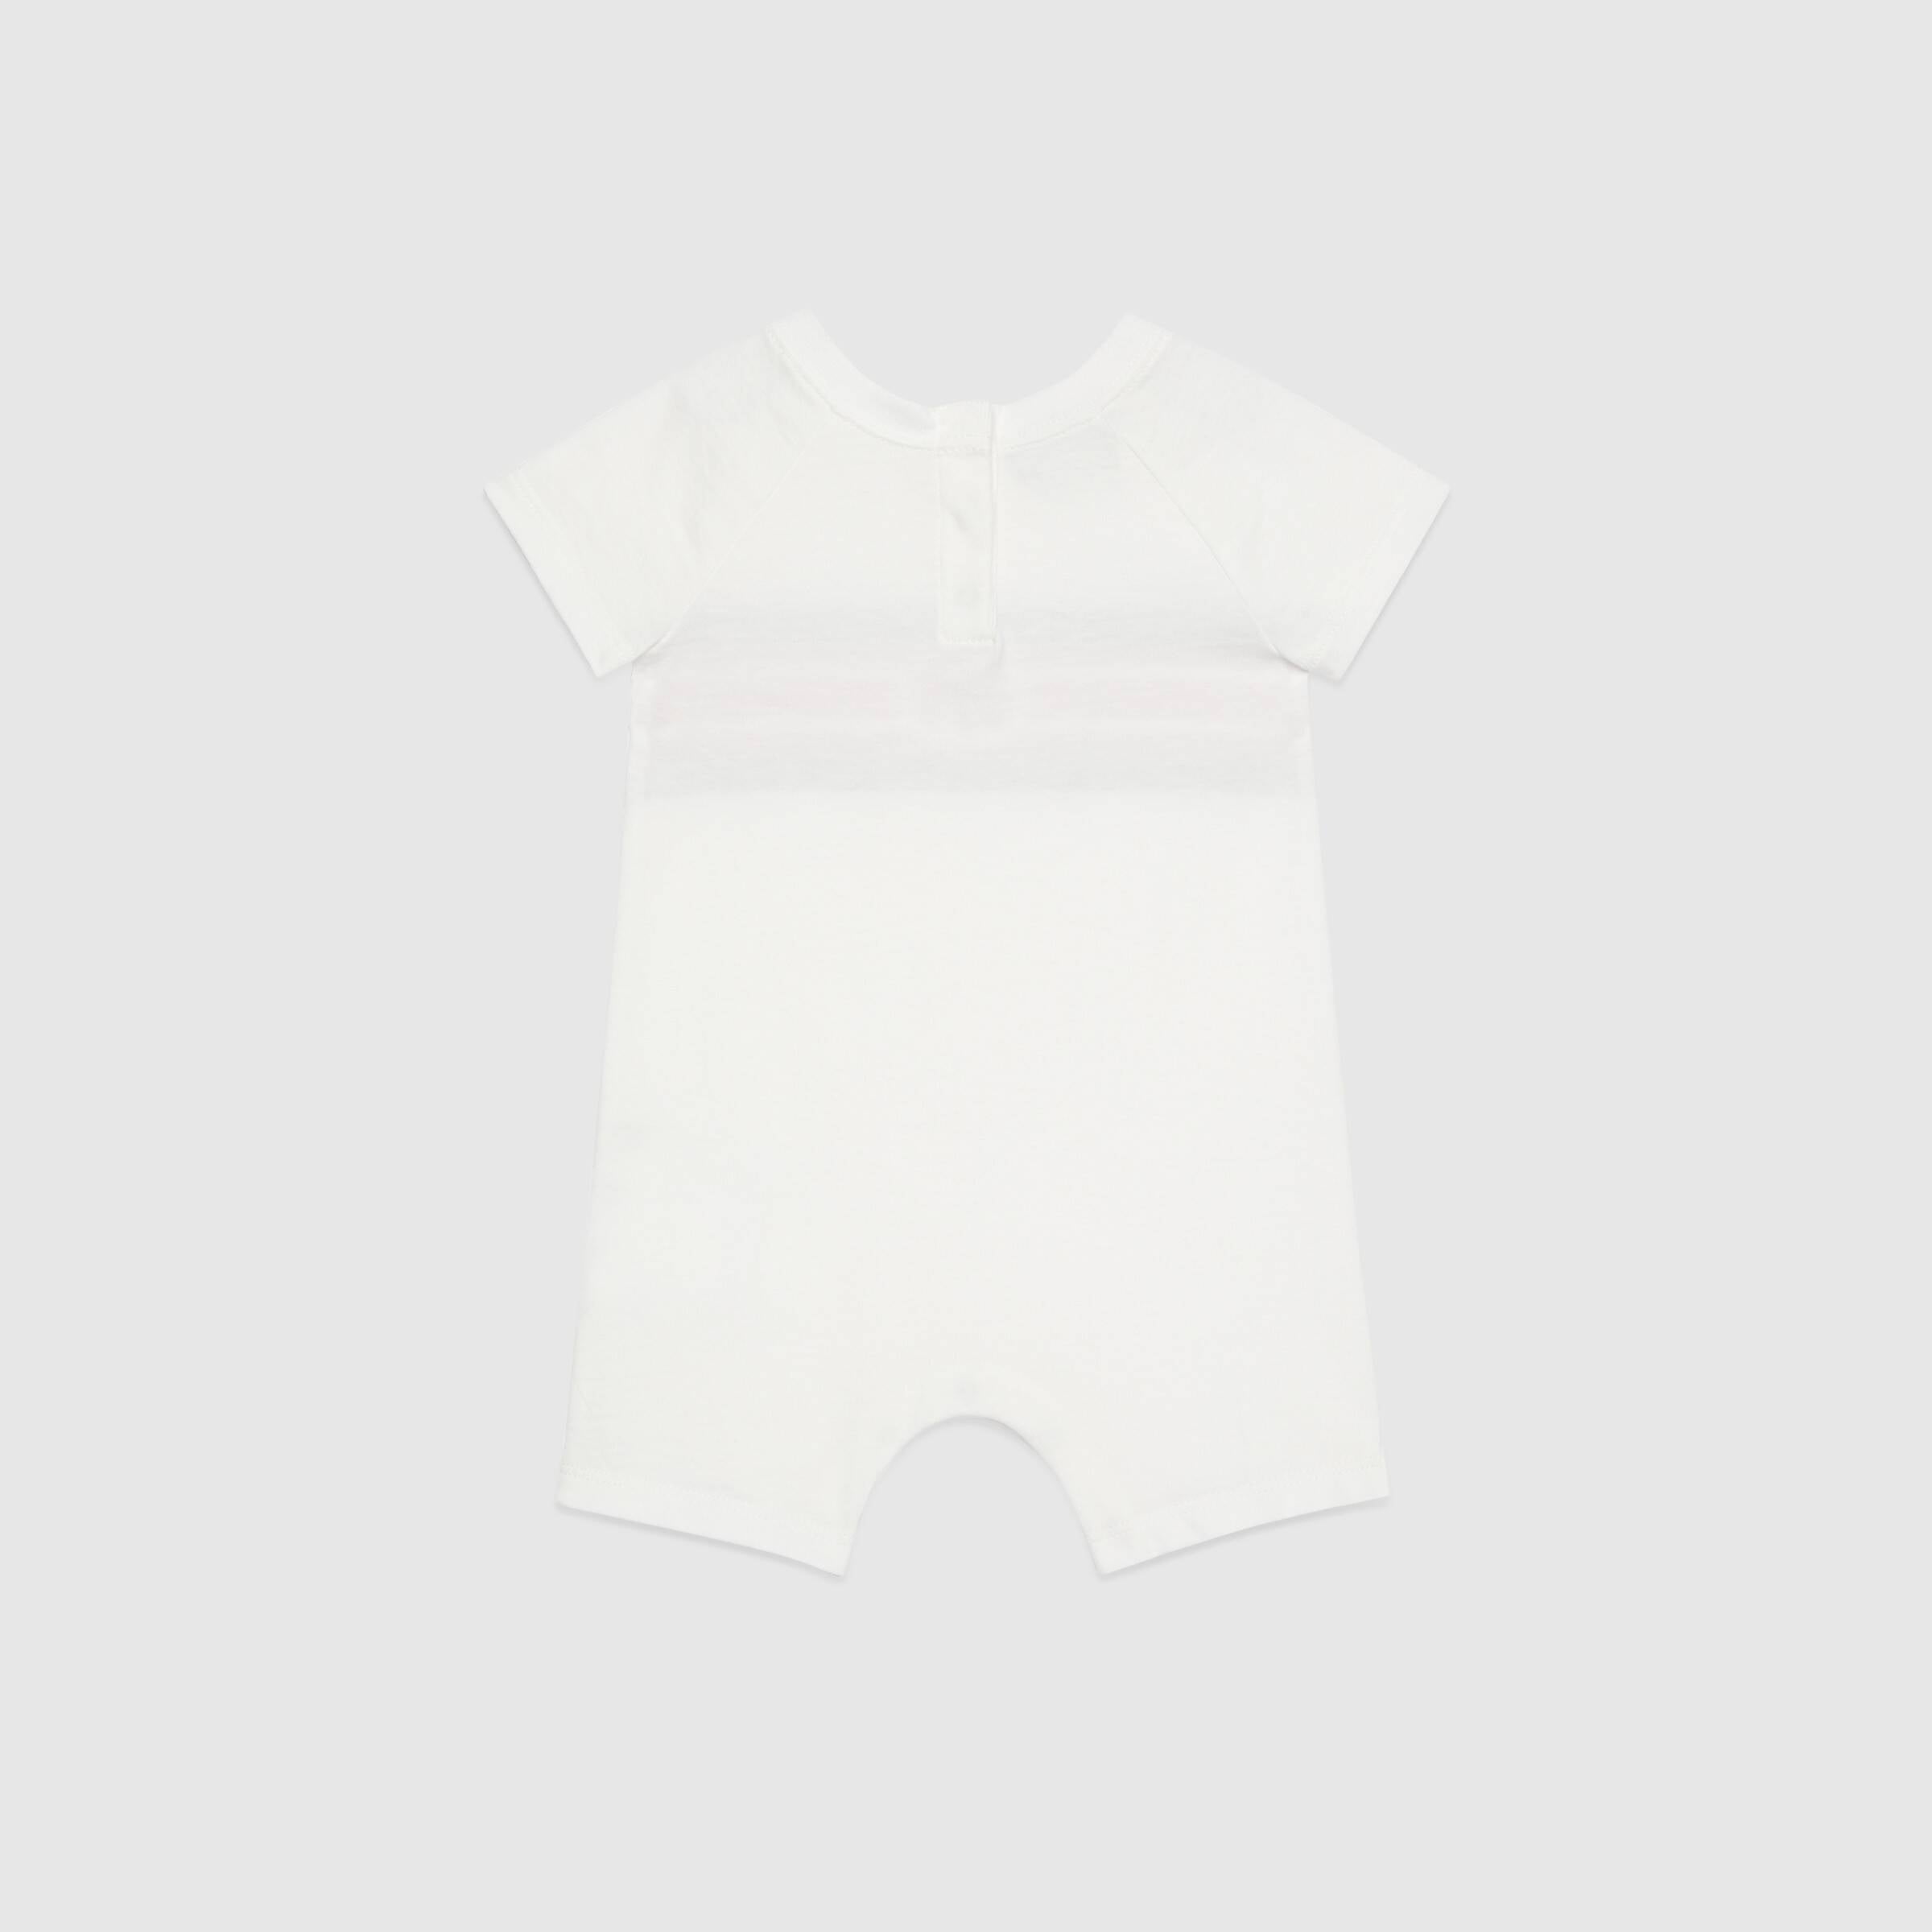 Baby Boys White Logo Cotton Babysuit